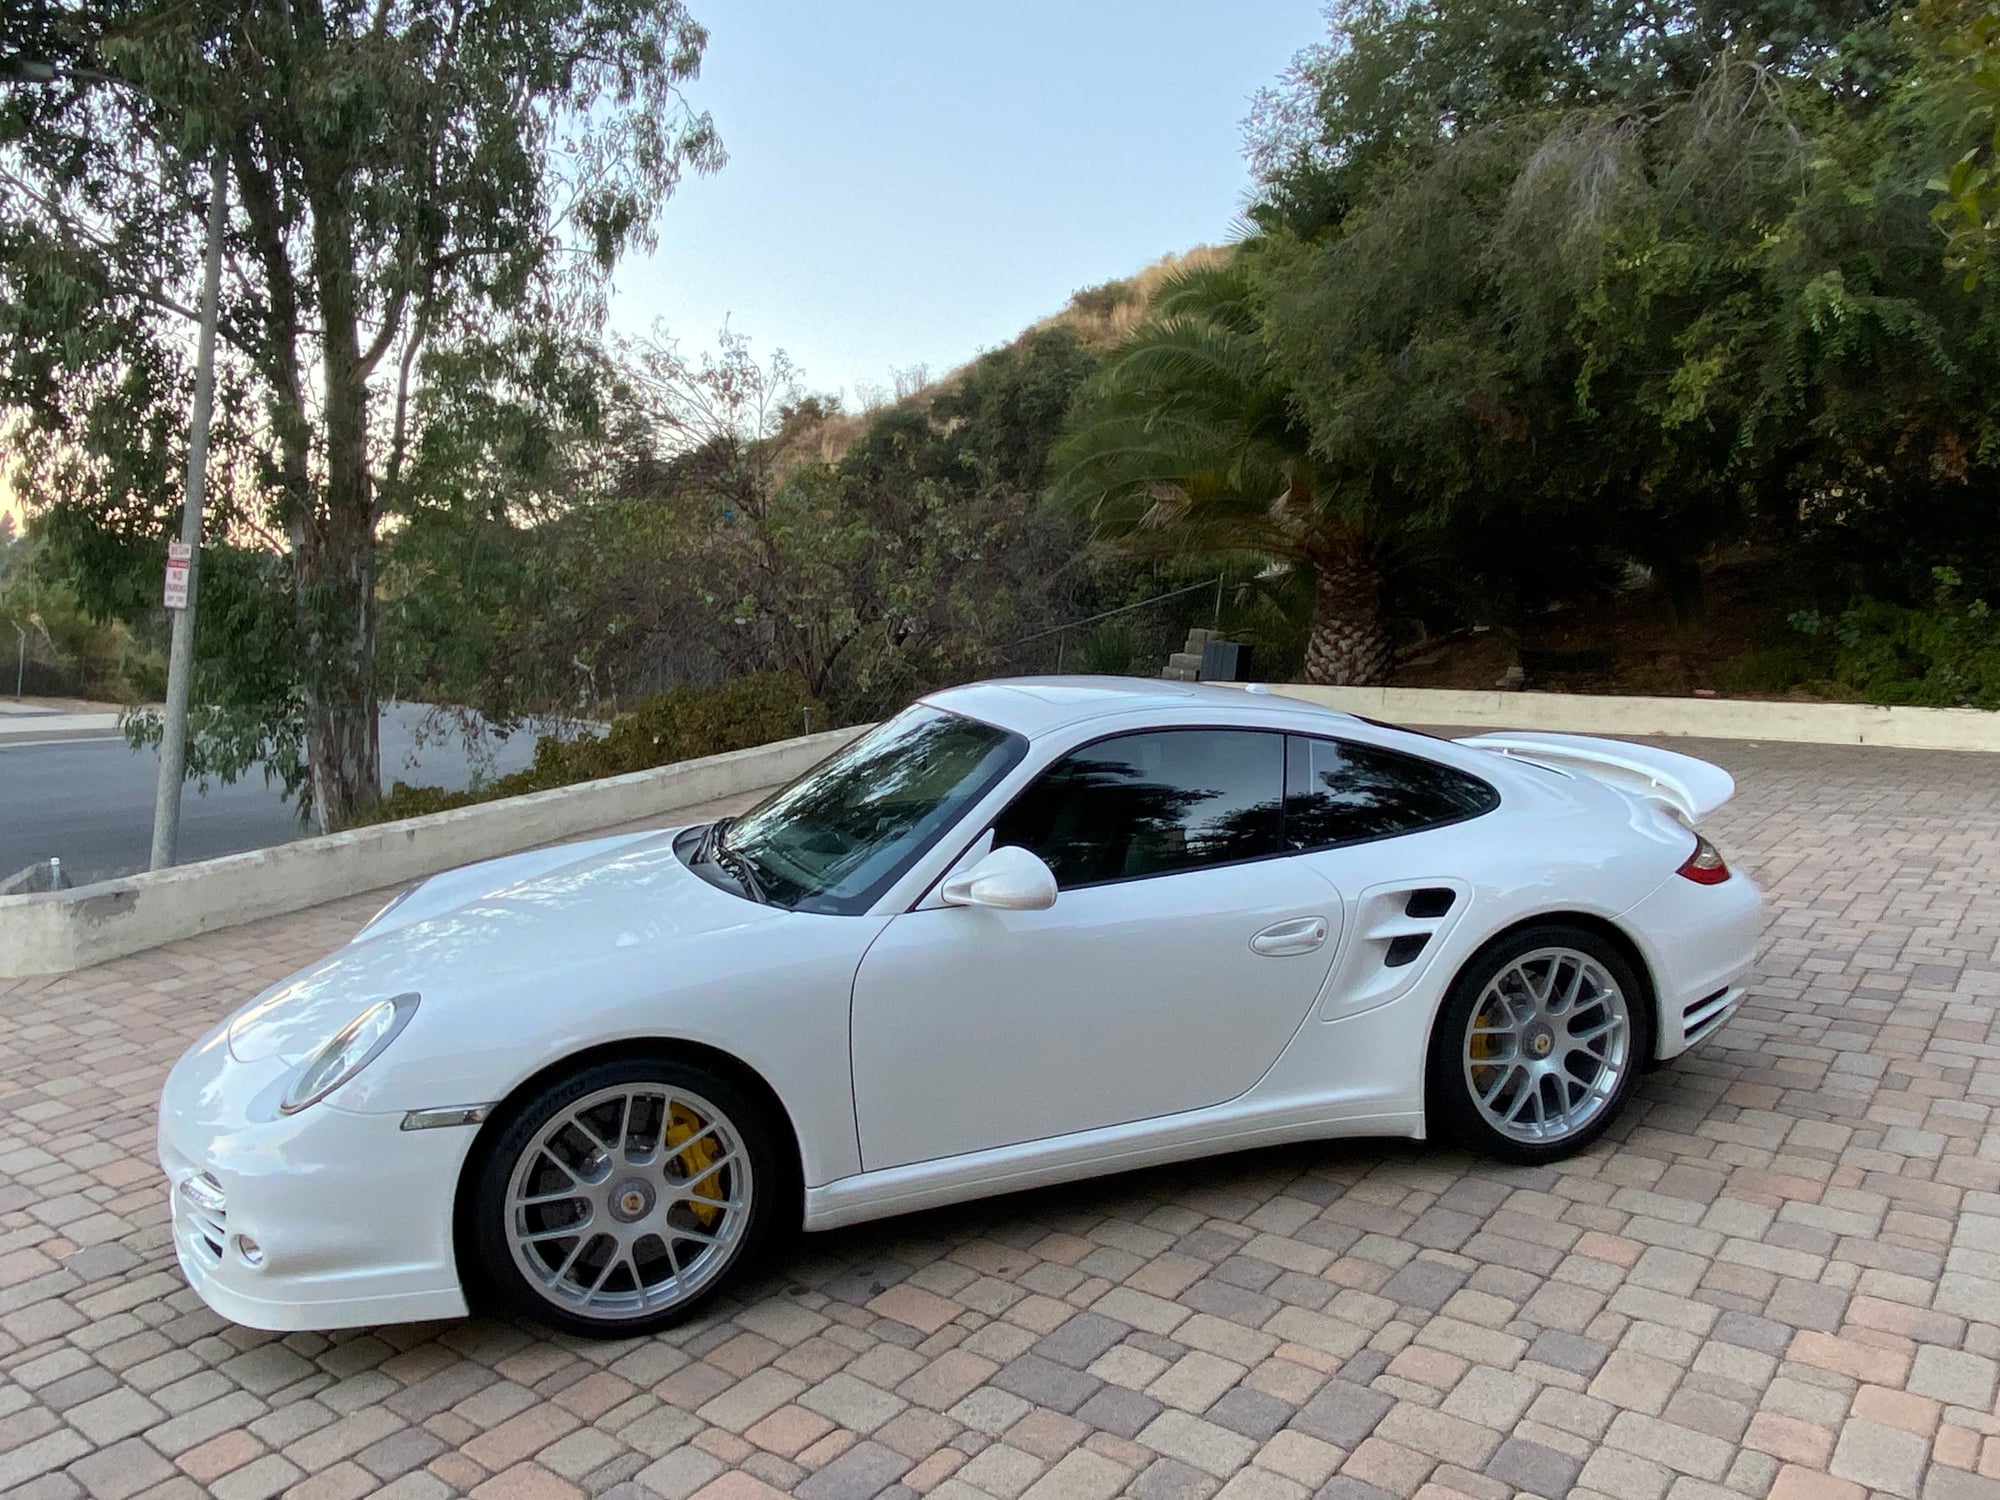 2012 Porsche 911 - 2012 Porsche 911 Turbo S - Used - VIN WP0AD2A93CS766282 - 30,225 Miles - 6 cyl - AWD - Automatic - Coupe - White - Pasadena, CA 91107, United States